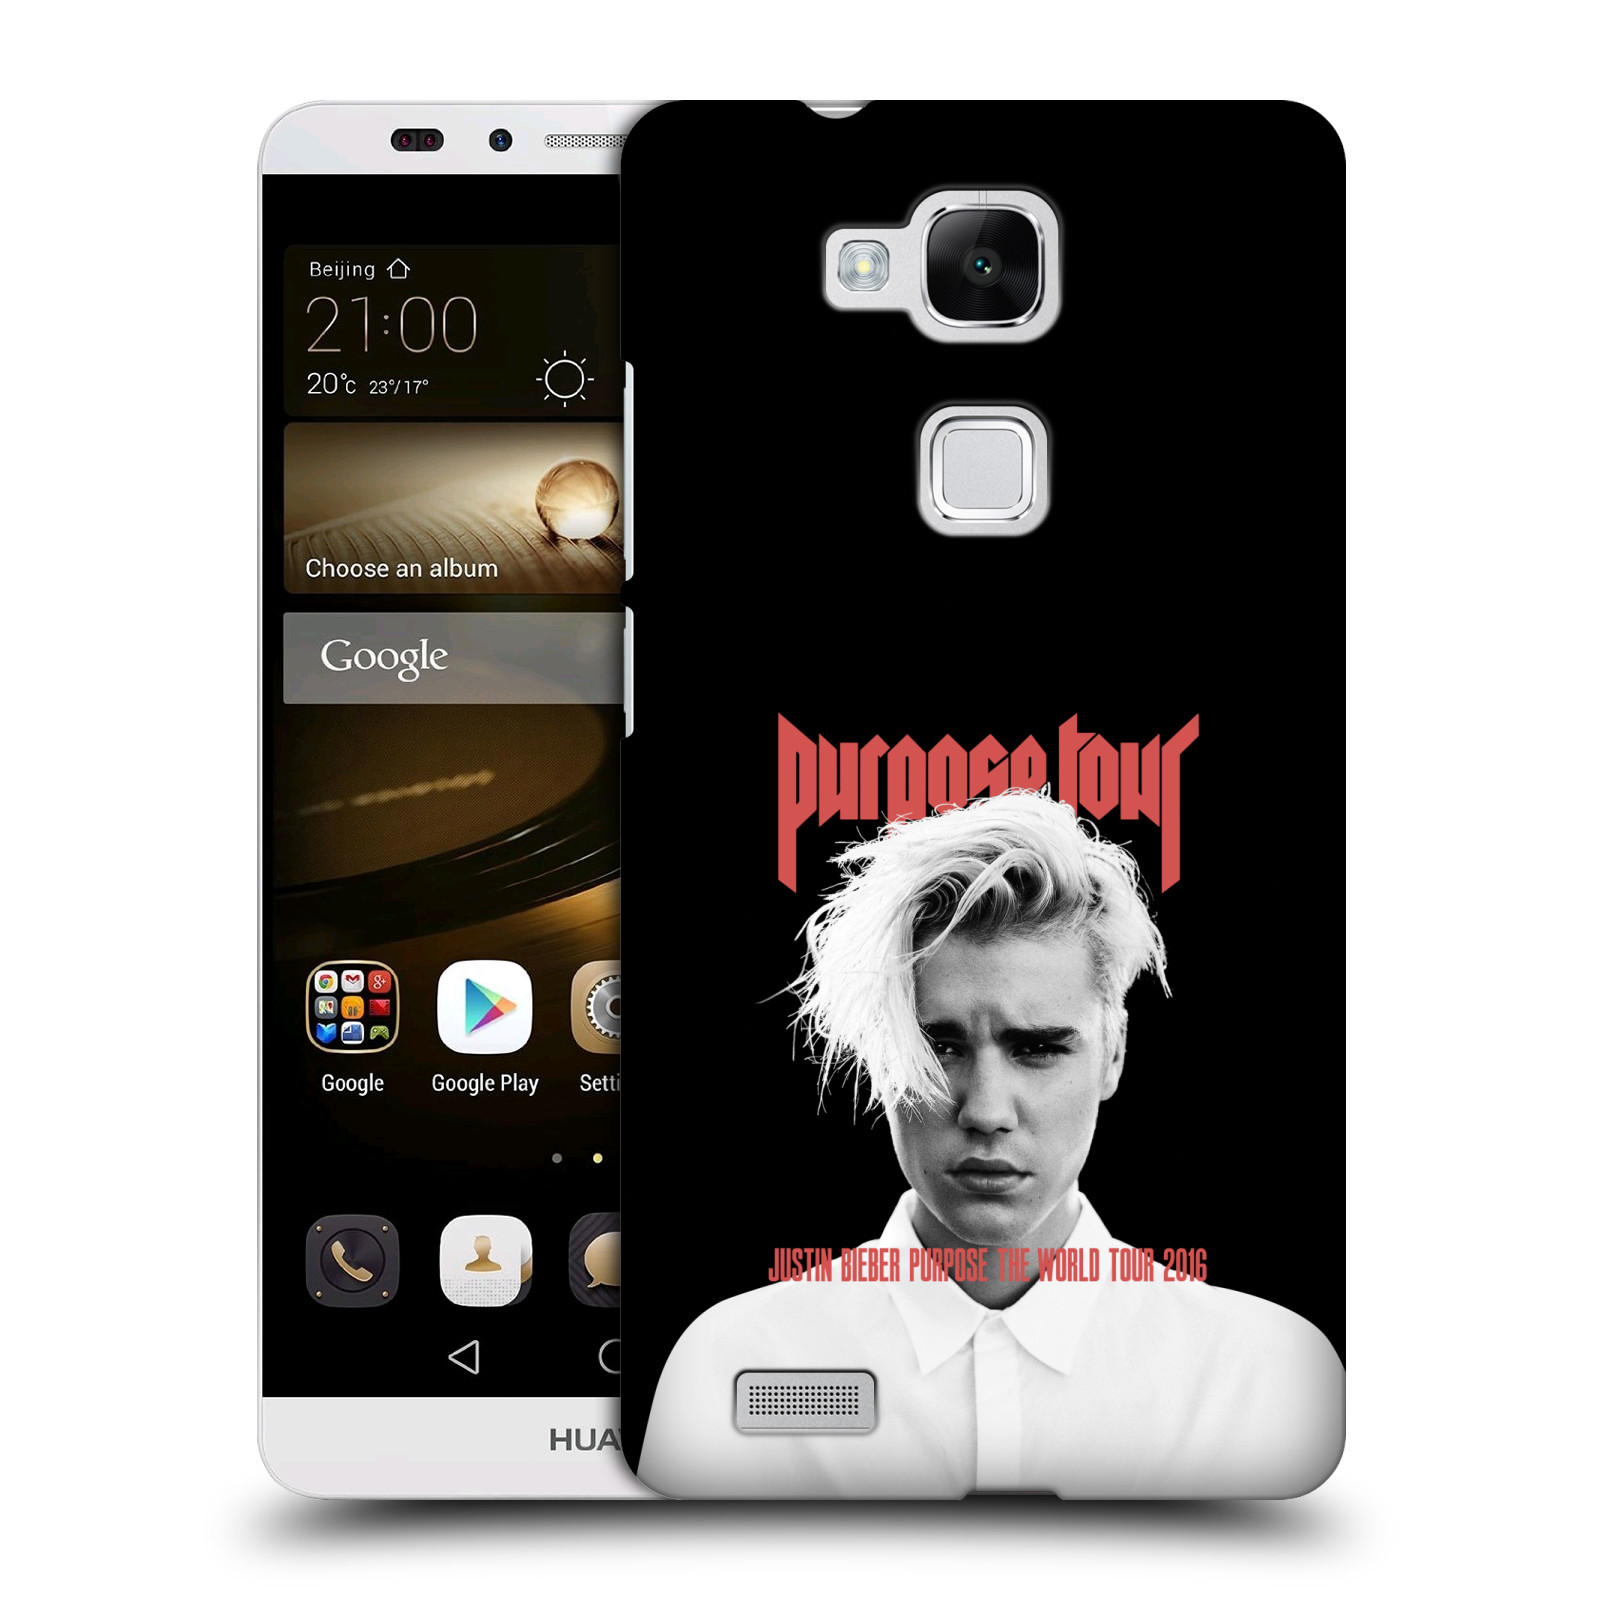 HEAD CASE plastový obal na mobil Huawei Mate 7 Justin Bieber foto Purpose tour černé pozadí